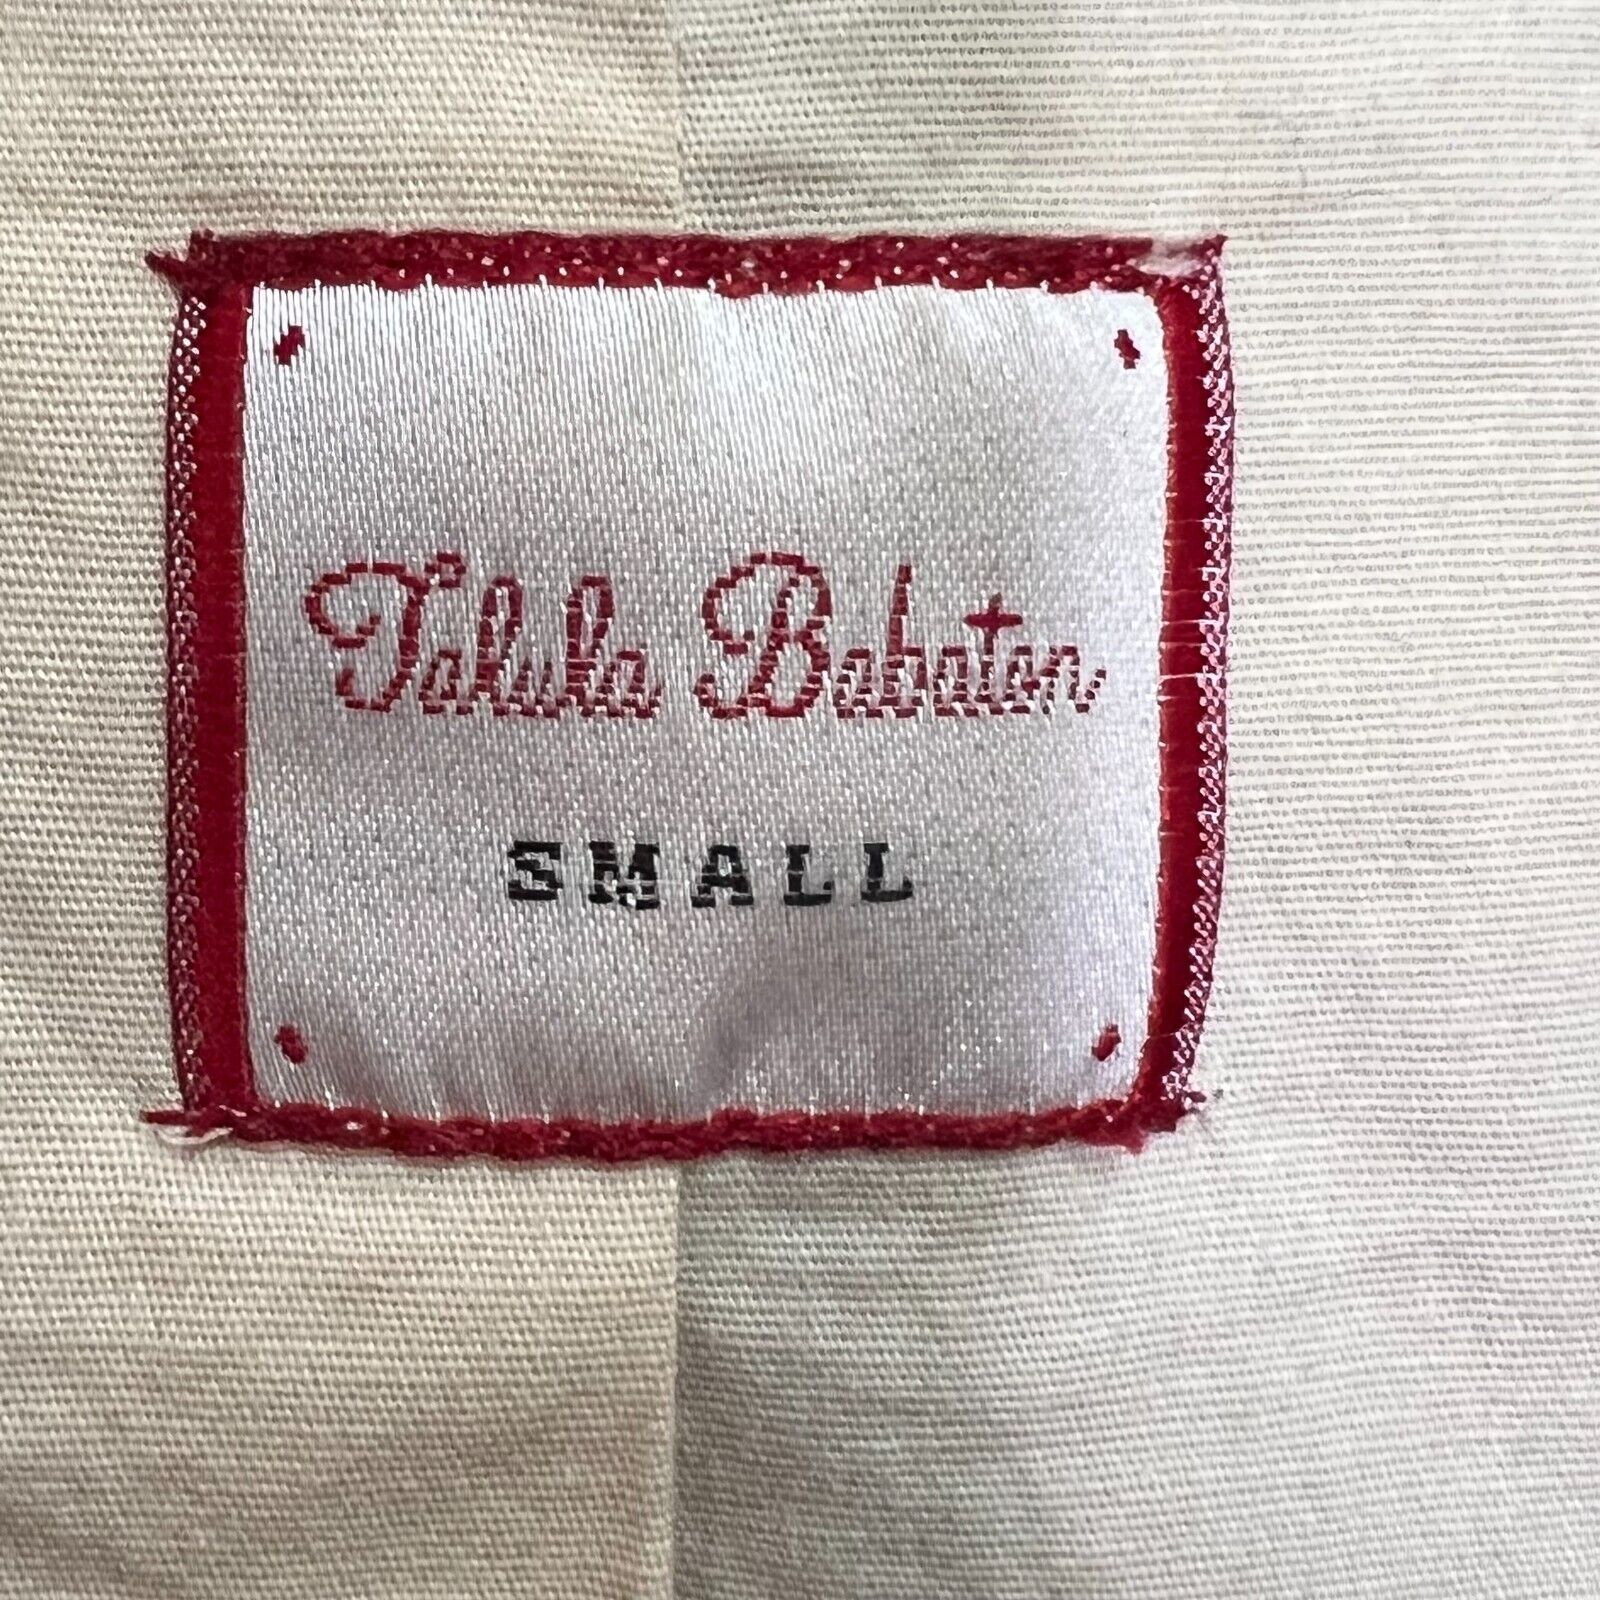 Aritzia Talula Babaton Velvet Paisley Blazer Jacket Size Small